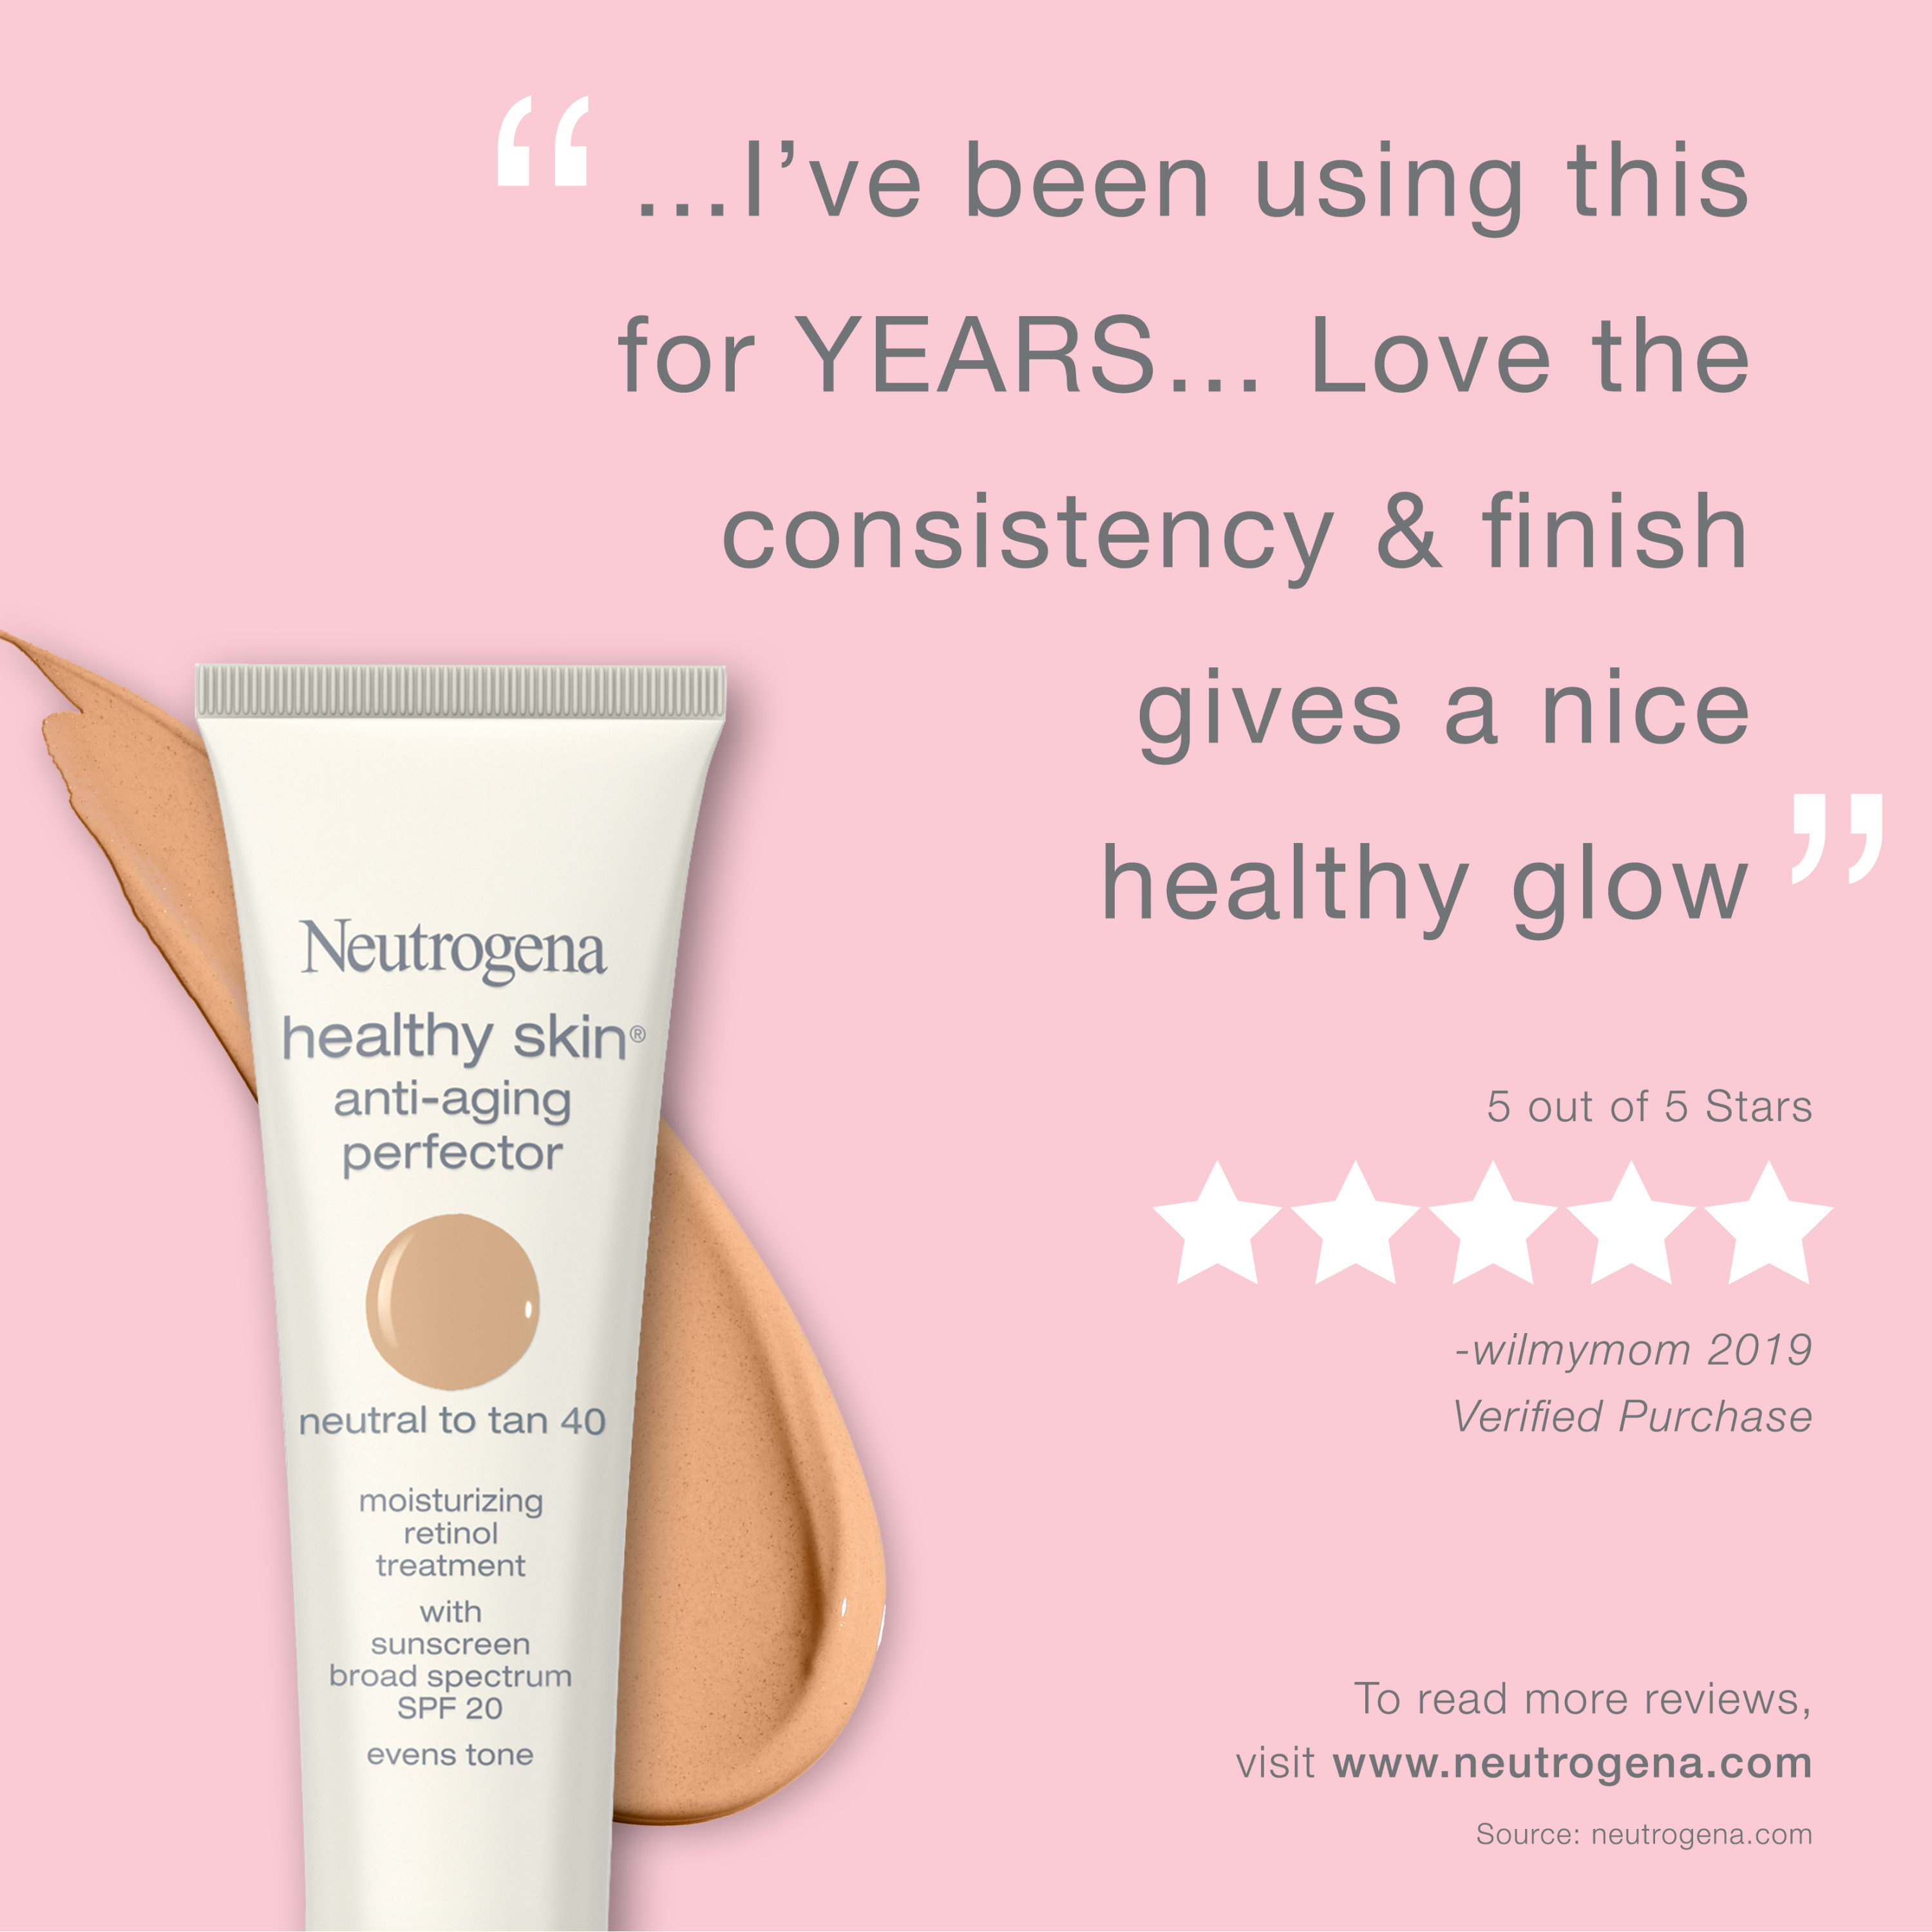 Neutrogena Healthy Skin Anti-Aging Tinted Face Moisturizer, Light/Neutral Skin Care, 1 oz - image 3 of 15